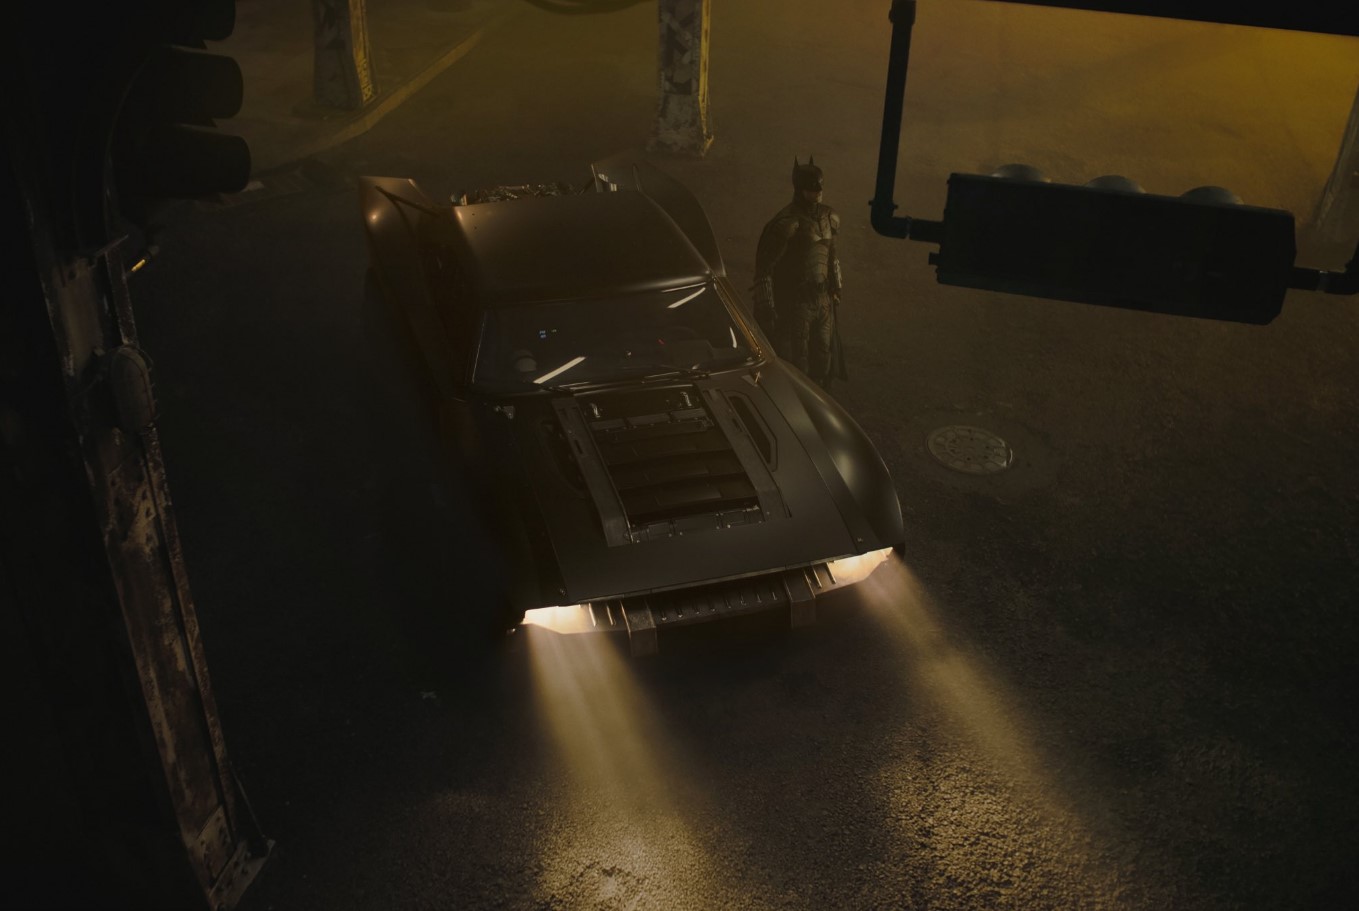 The Batman Batmobile